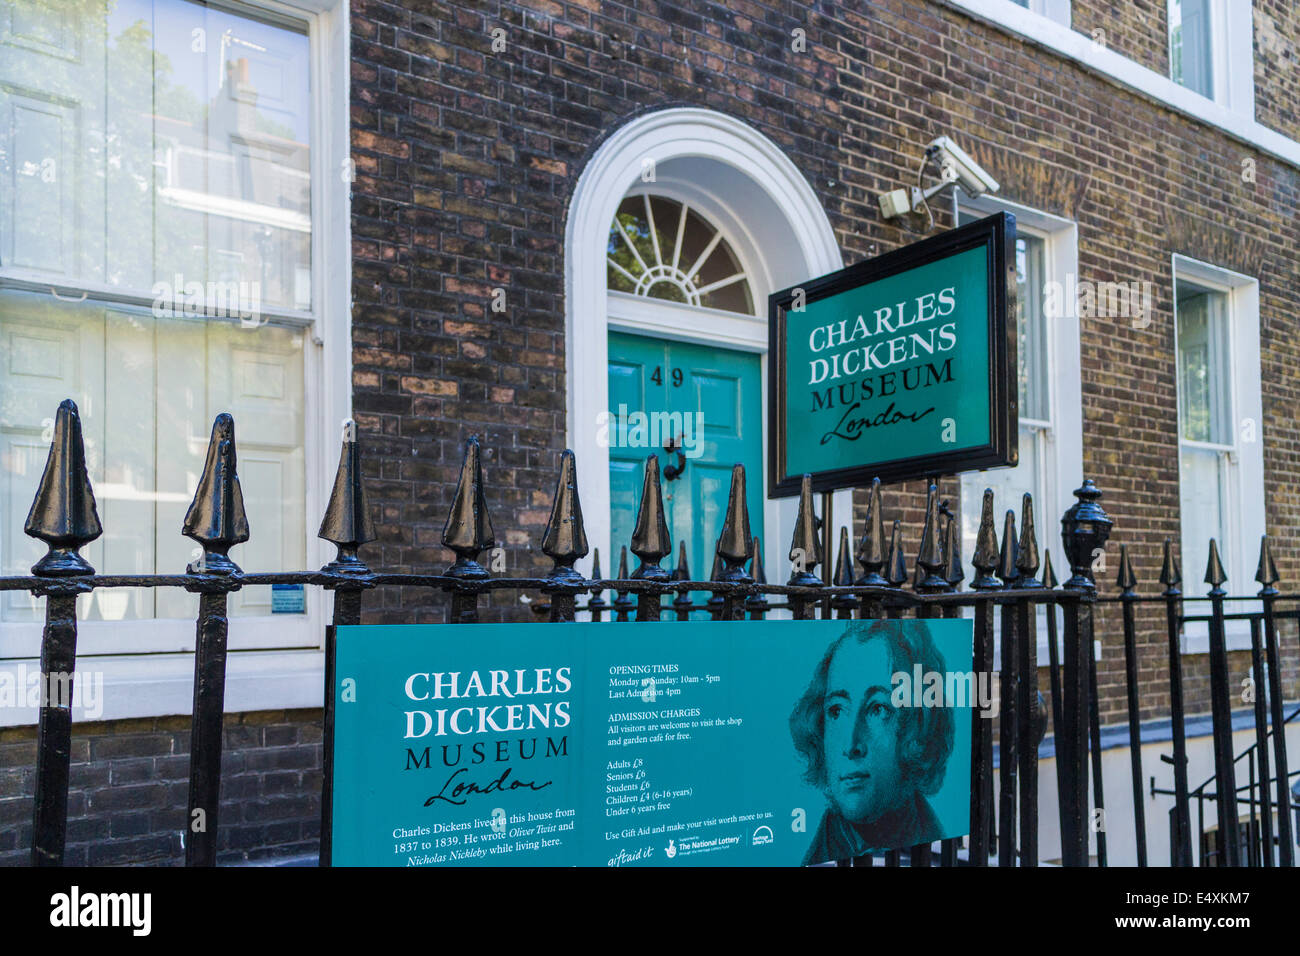 Charles Dickens Museum - London Stock Photo